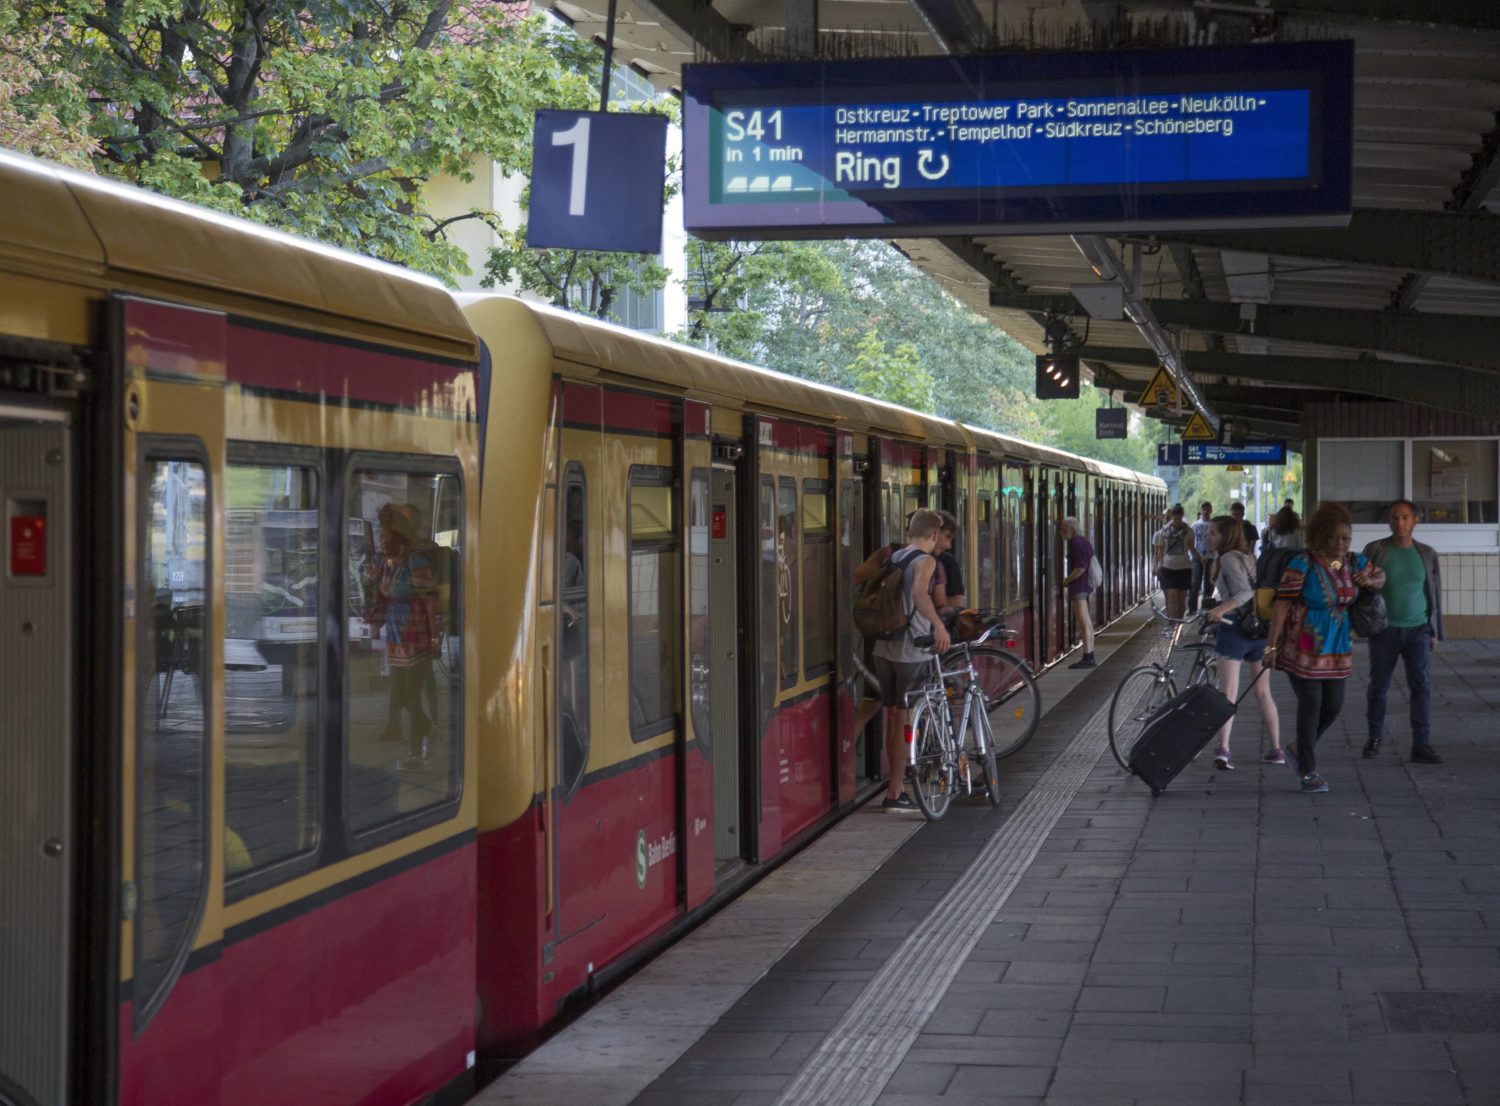 Ringbahn der Linie S41 am Bahnhof Frankfurter Allee. Foto: Imago/Olaf Wagner